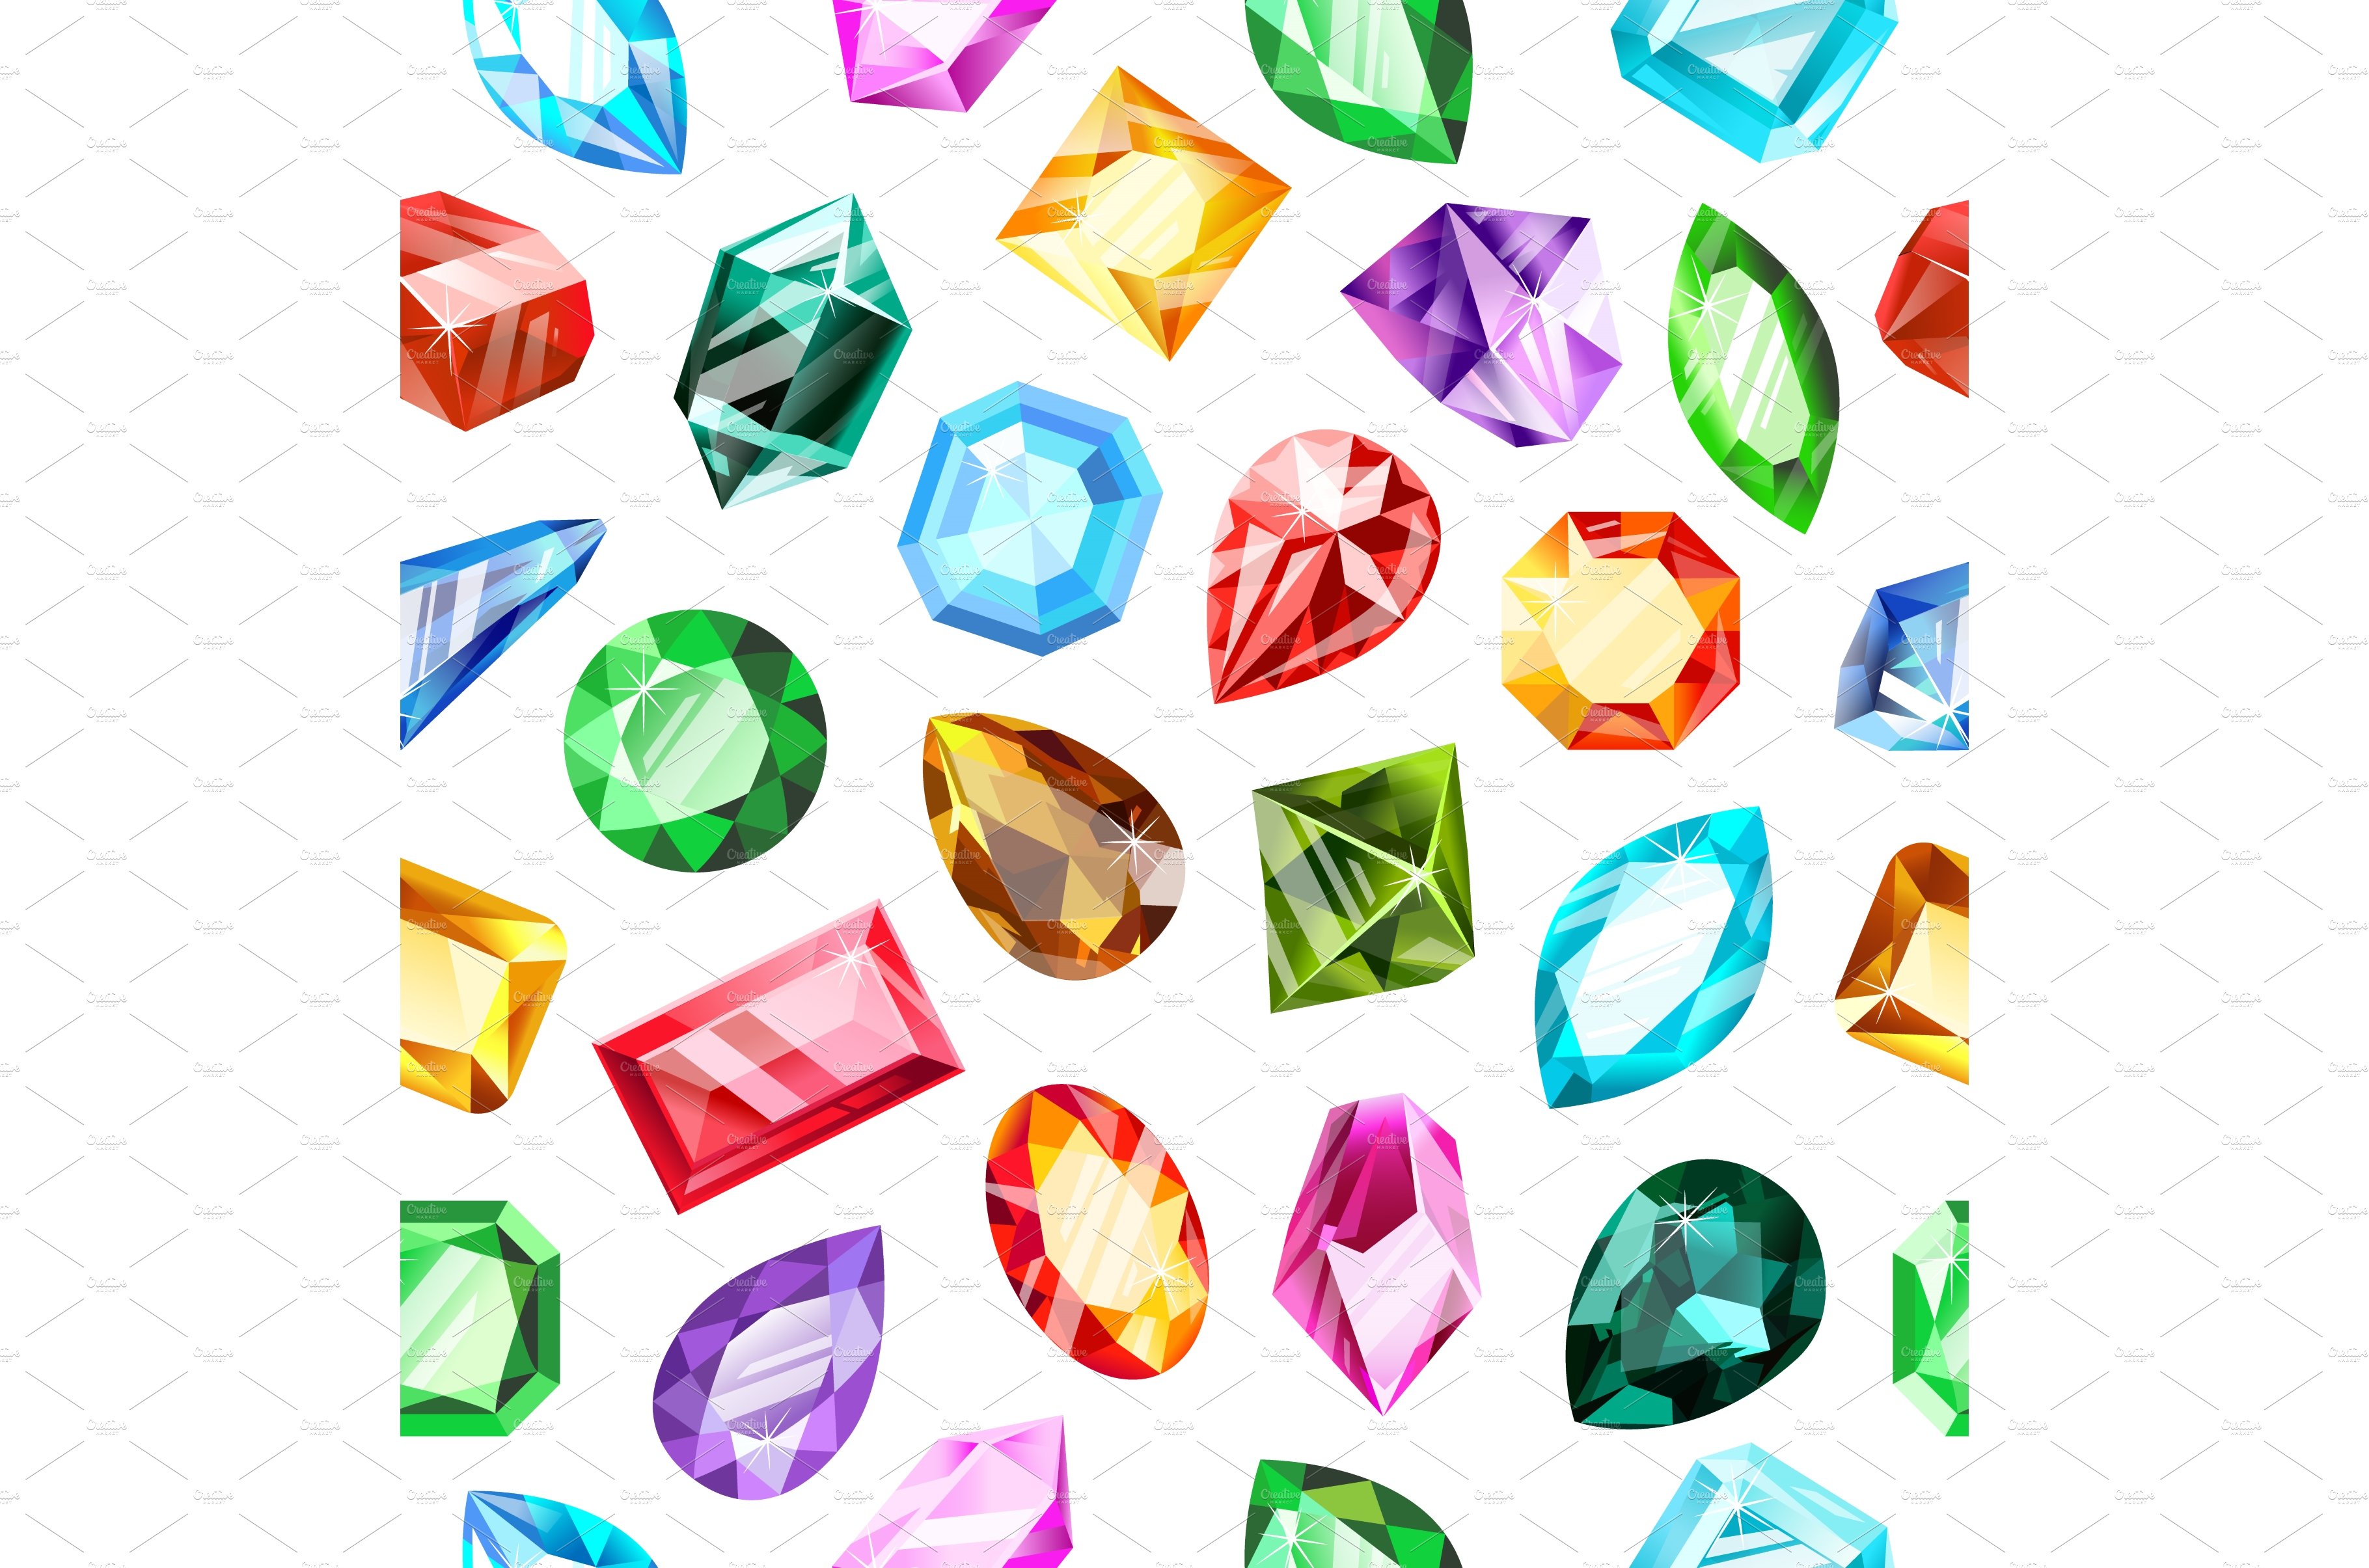 Jewel gems pattern. Crystal gemstone cover image.